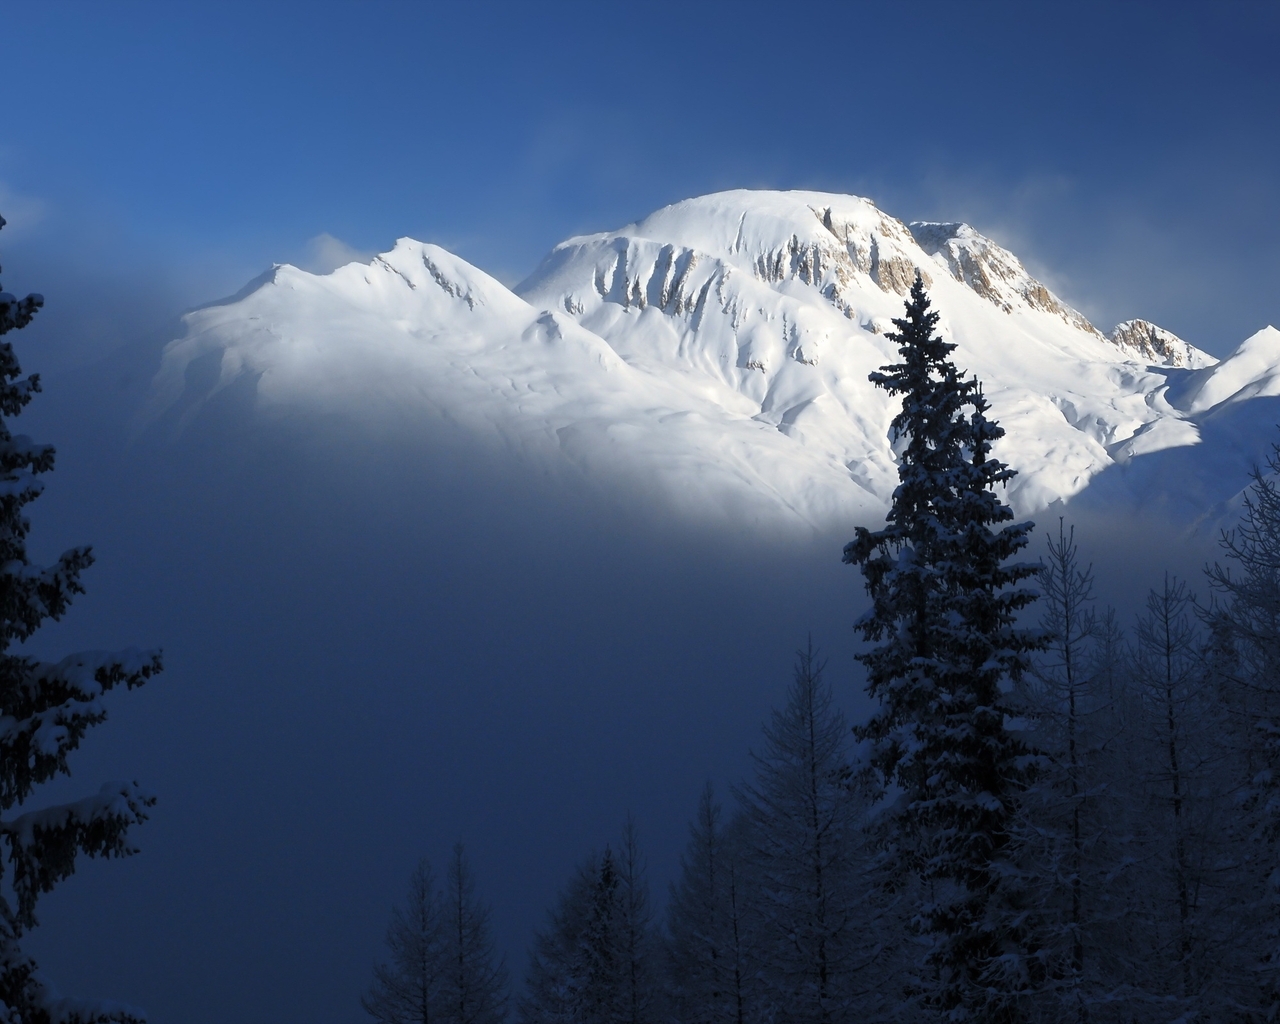 Image: Landscape, mountains, snow, fog, lighting, conifers